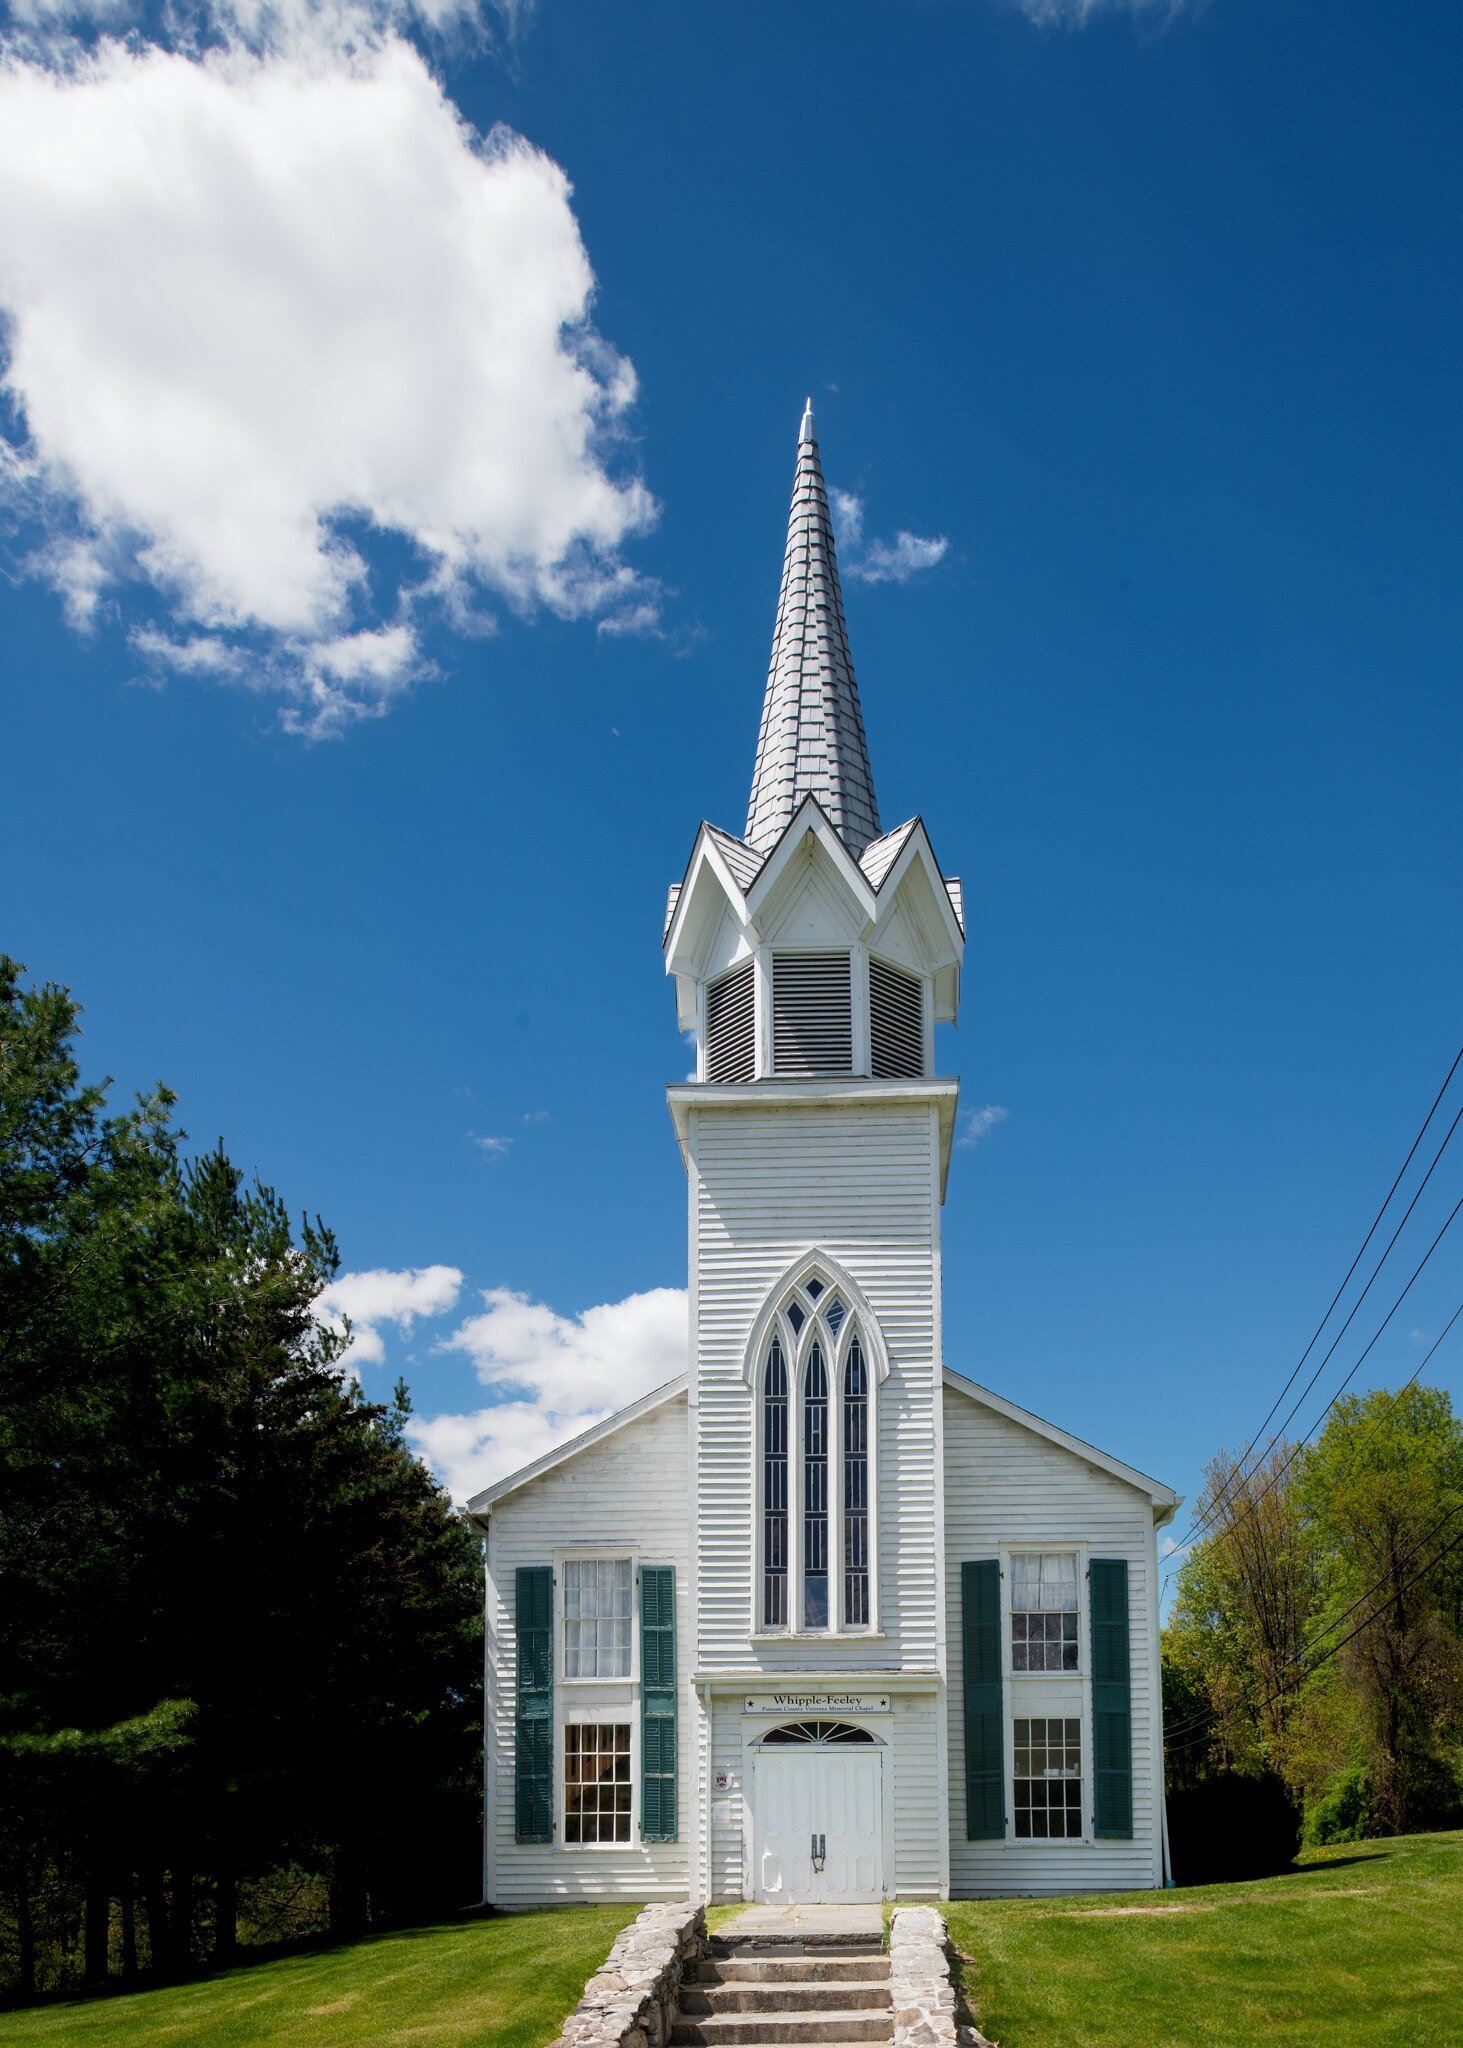  Whipple Feeley Putnam County Veterans Memorial Chapel in Putnam County, NY. 